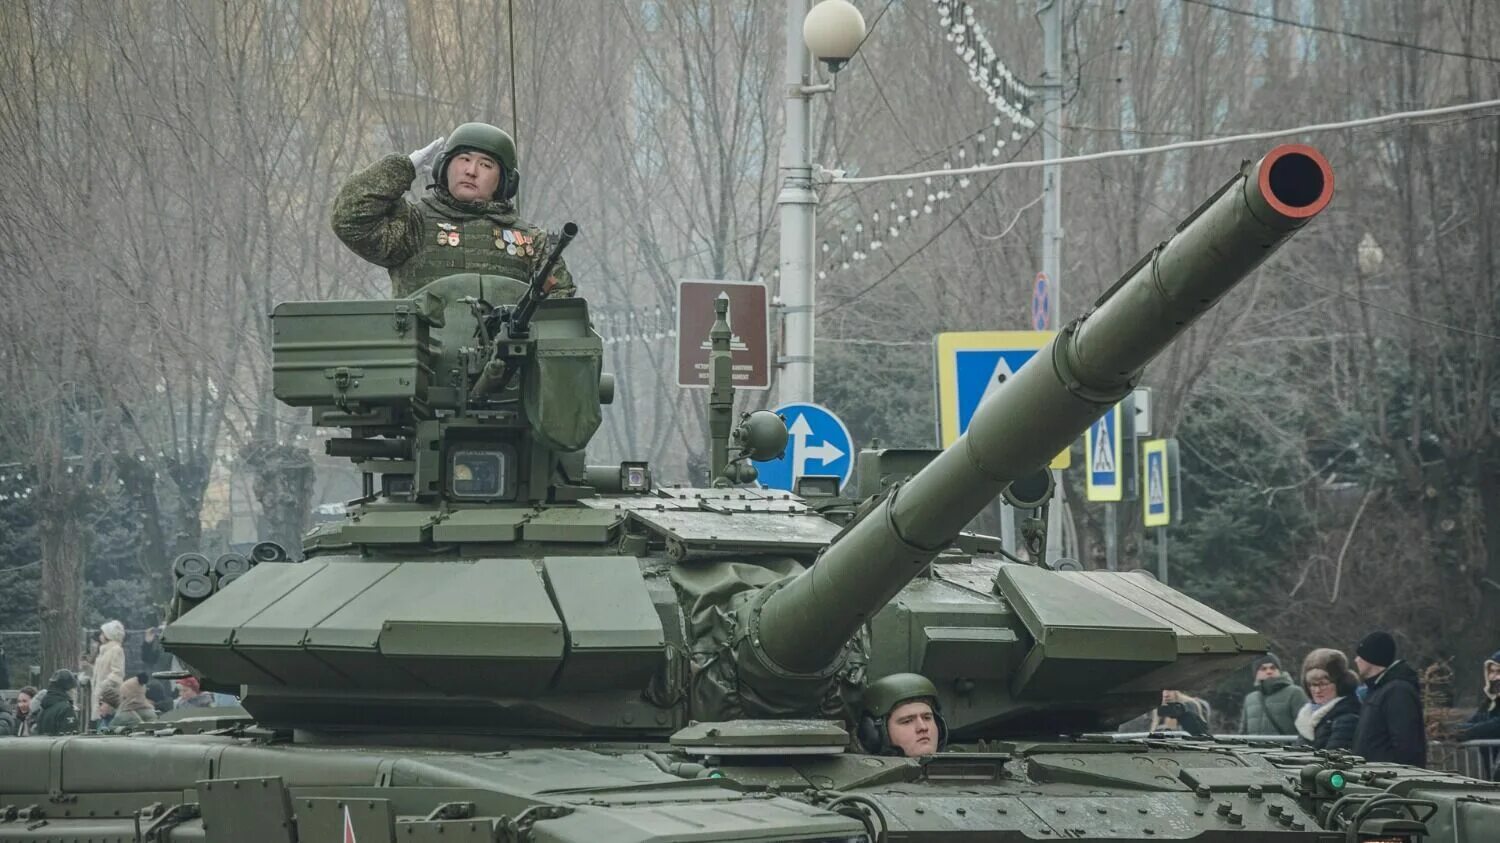 Военные техники. Парад боевой техники. Парад 2 февраля Волгоград. Военная техника "танк".